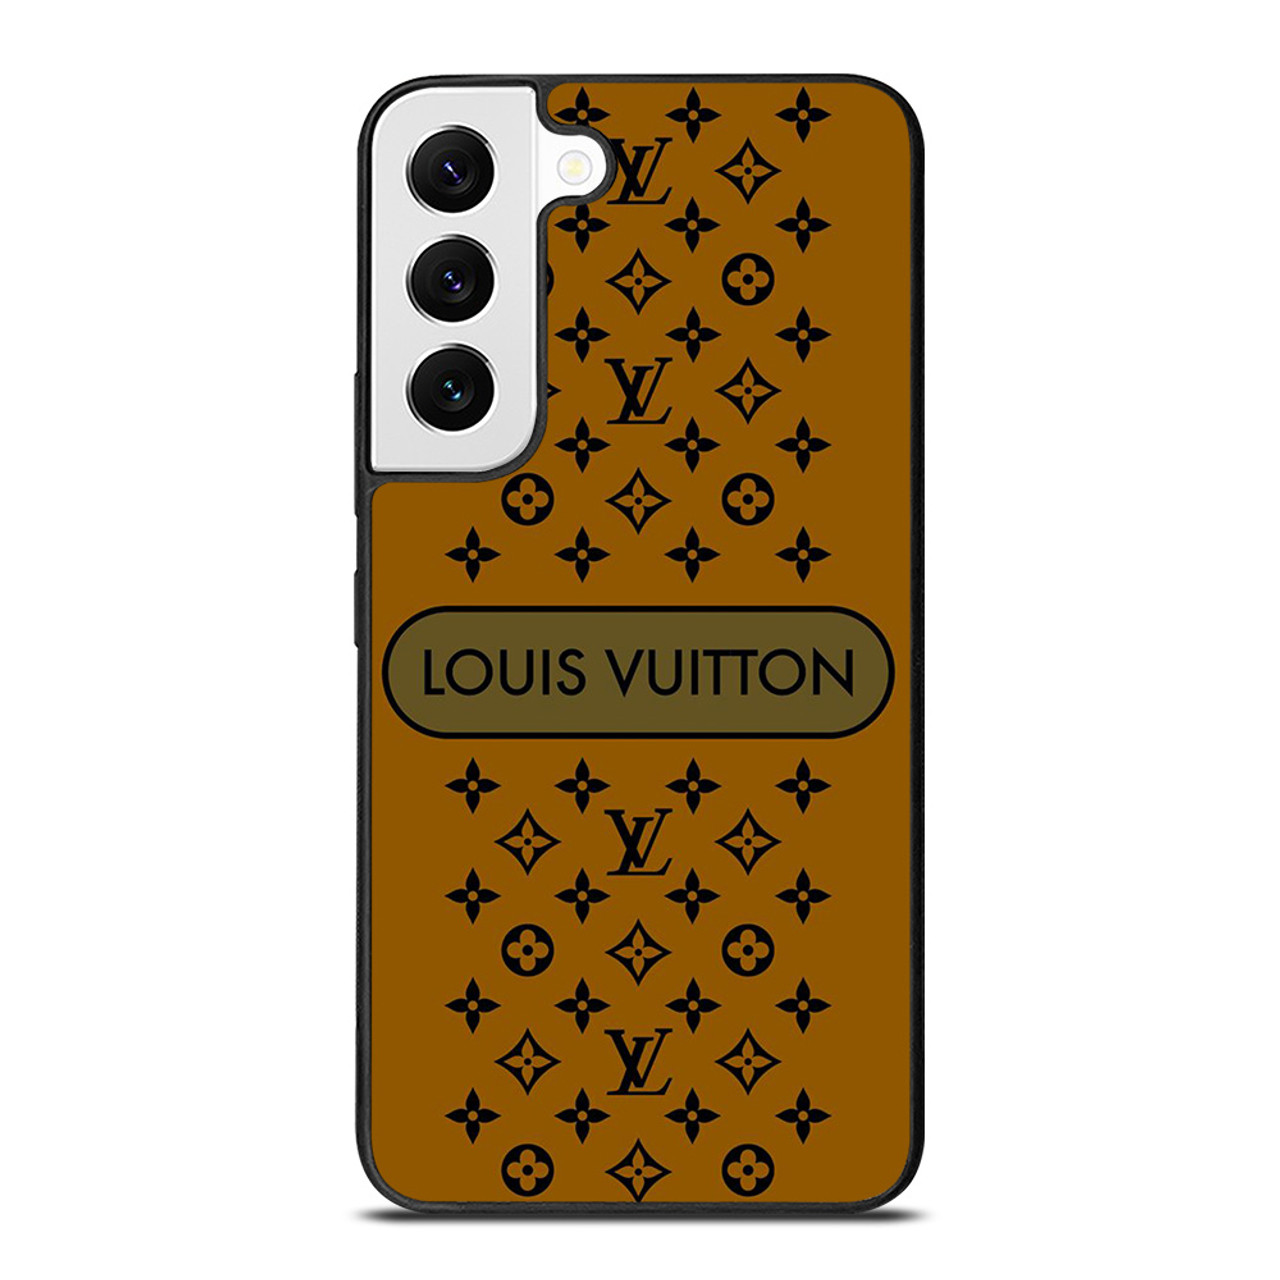 LOUIS VUITTON PATTERN LV LOGO ICON GOLD Samsung Galaxy